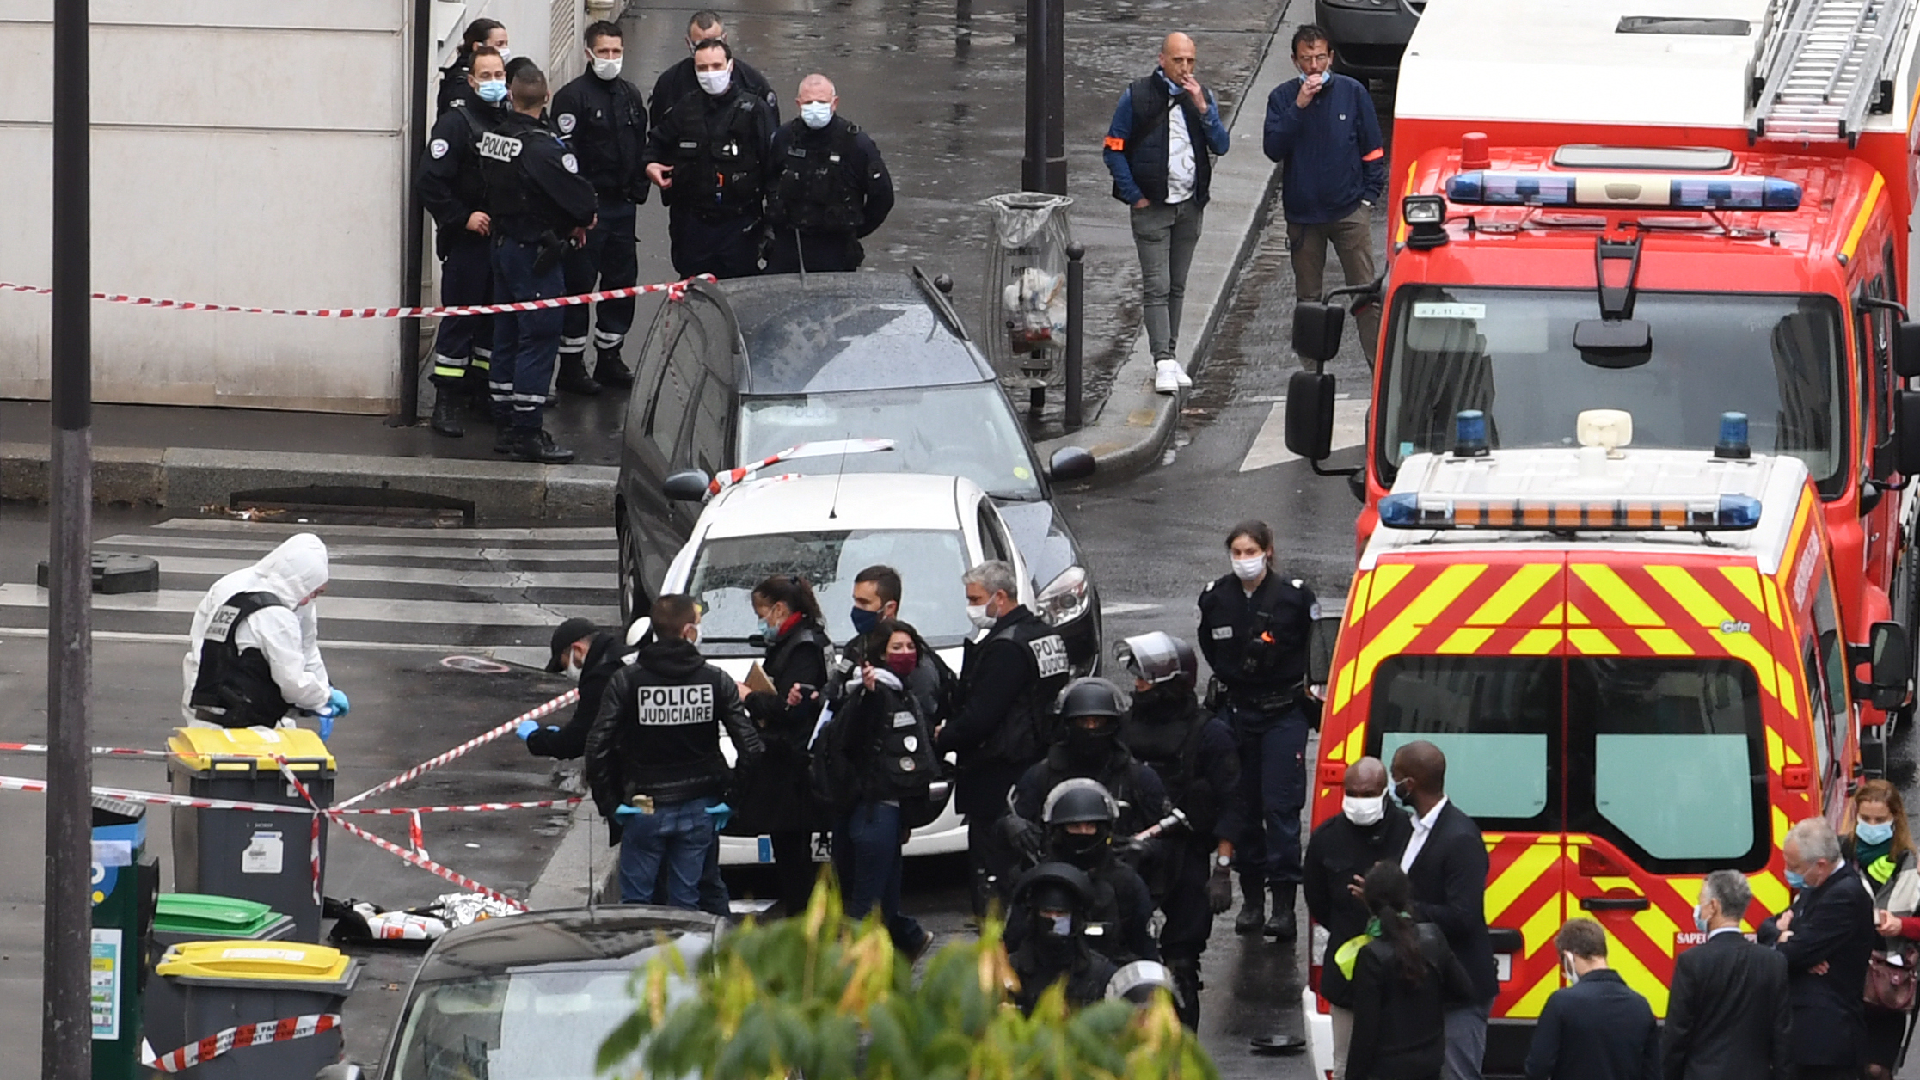 Теракты в париже в 2015 году. Атака на Шарли Эбдо в Париже. Теракт в Париже 13 ноября 2015.